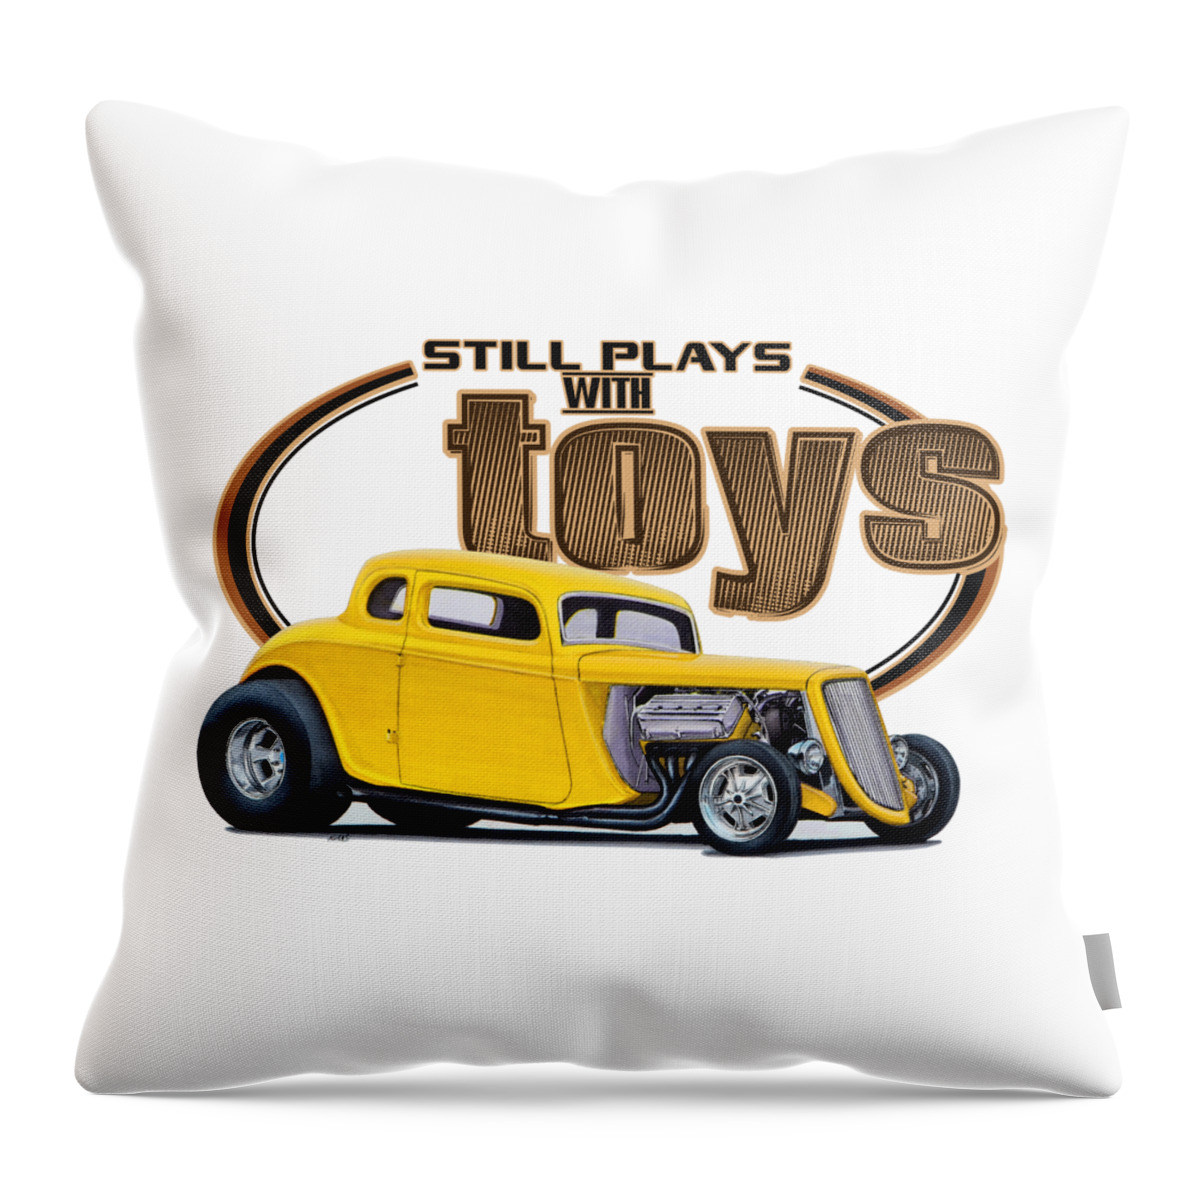 Hot Rod Throw Pillow featuring the digital art Still Plays with Hot Rod Cars by Paul Kuras